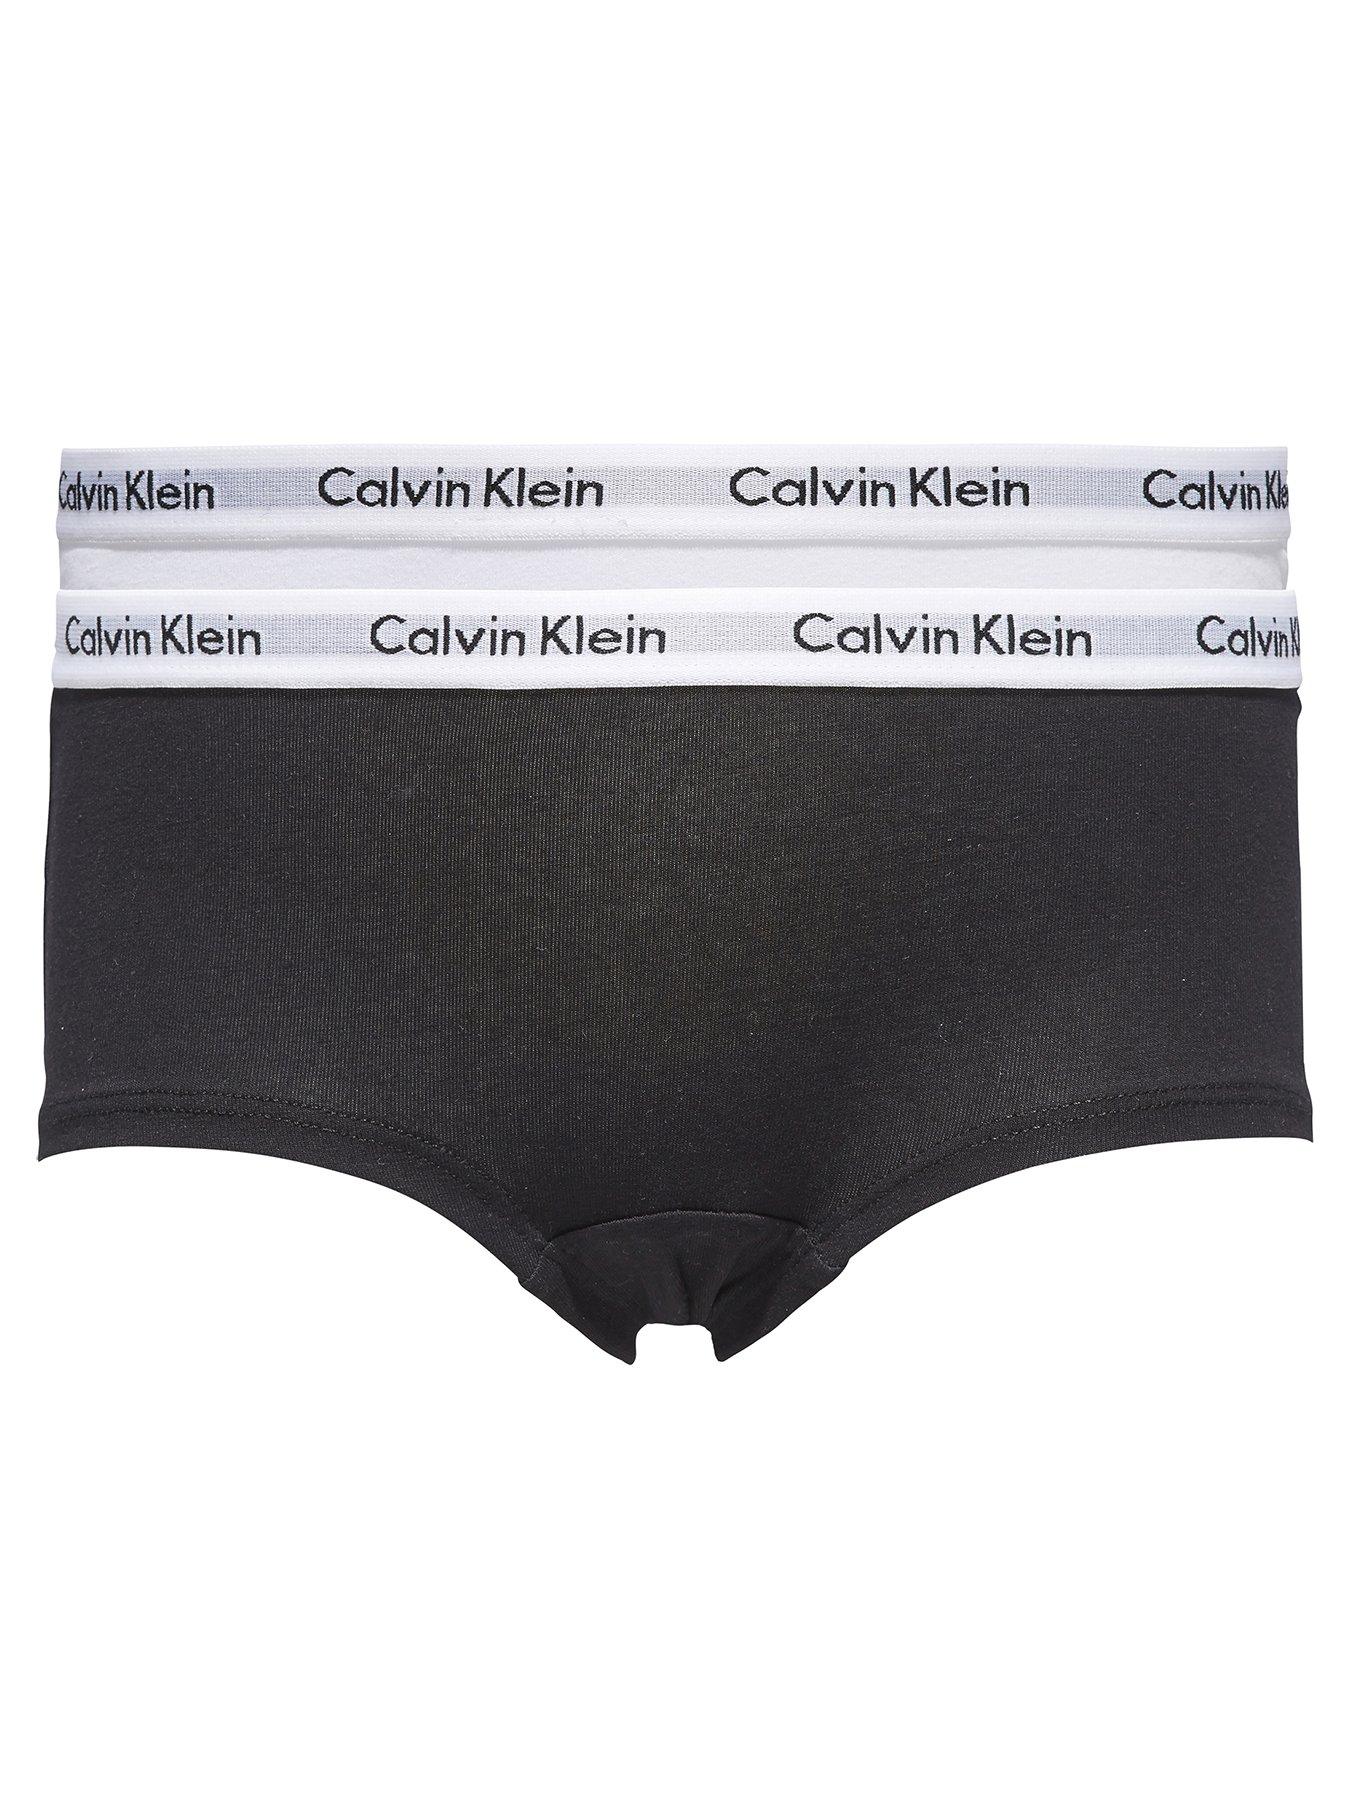 Calvin Klein 2-Pack Bikini Girls Knickers Age 14-16 908 White/Black